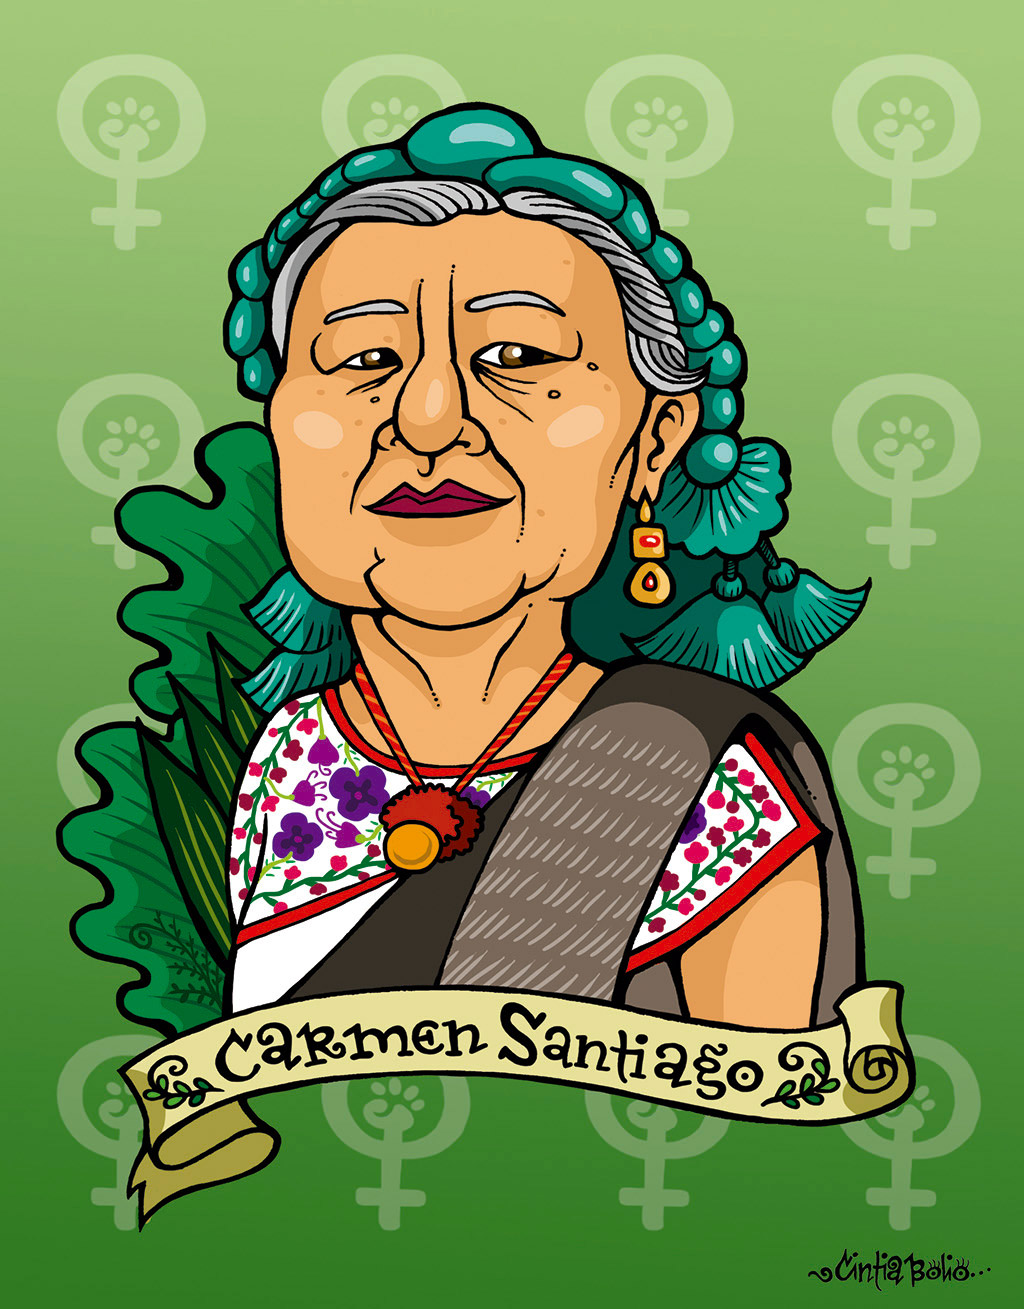 Carmen Santiago